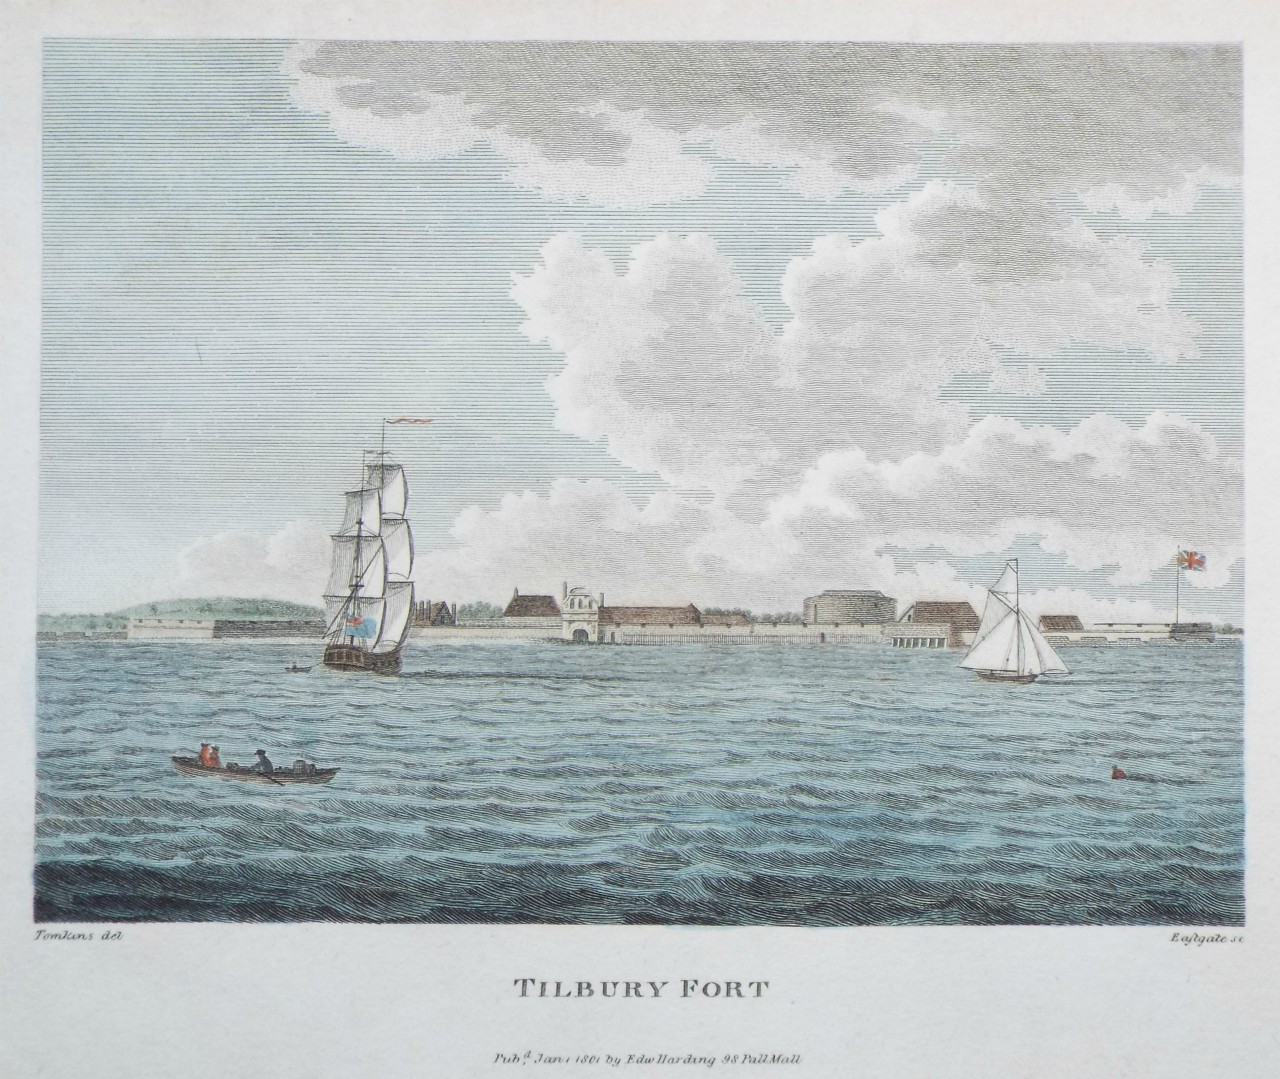 Print - Tilbury Fort - 